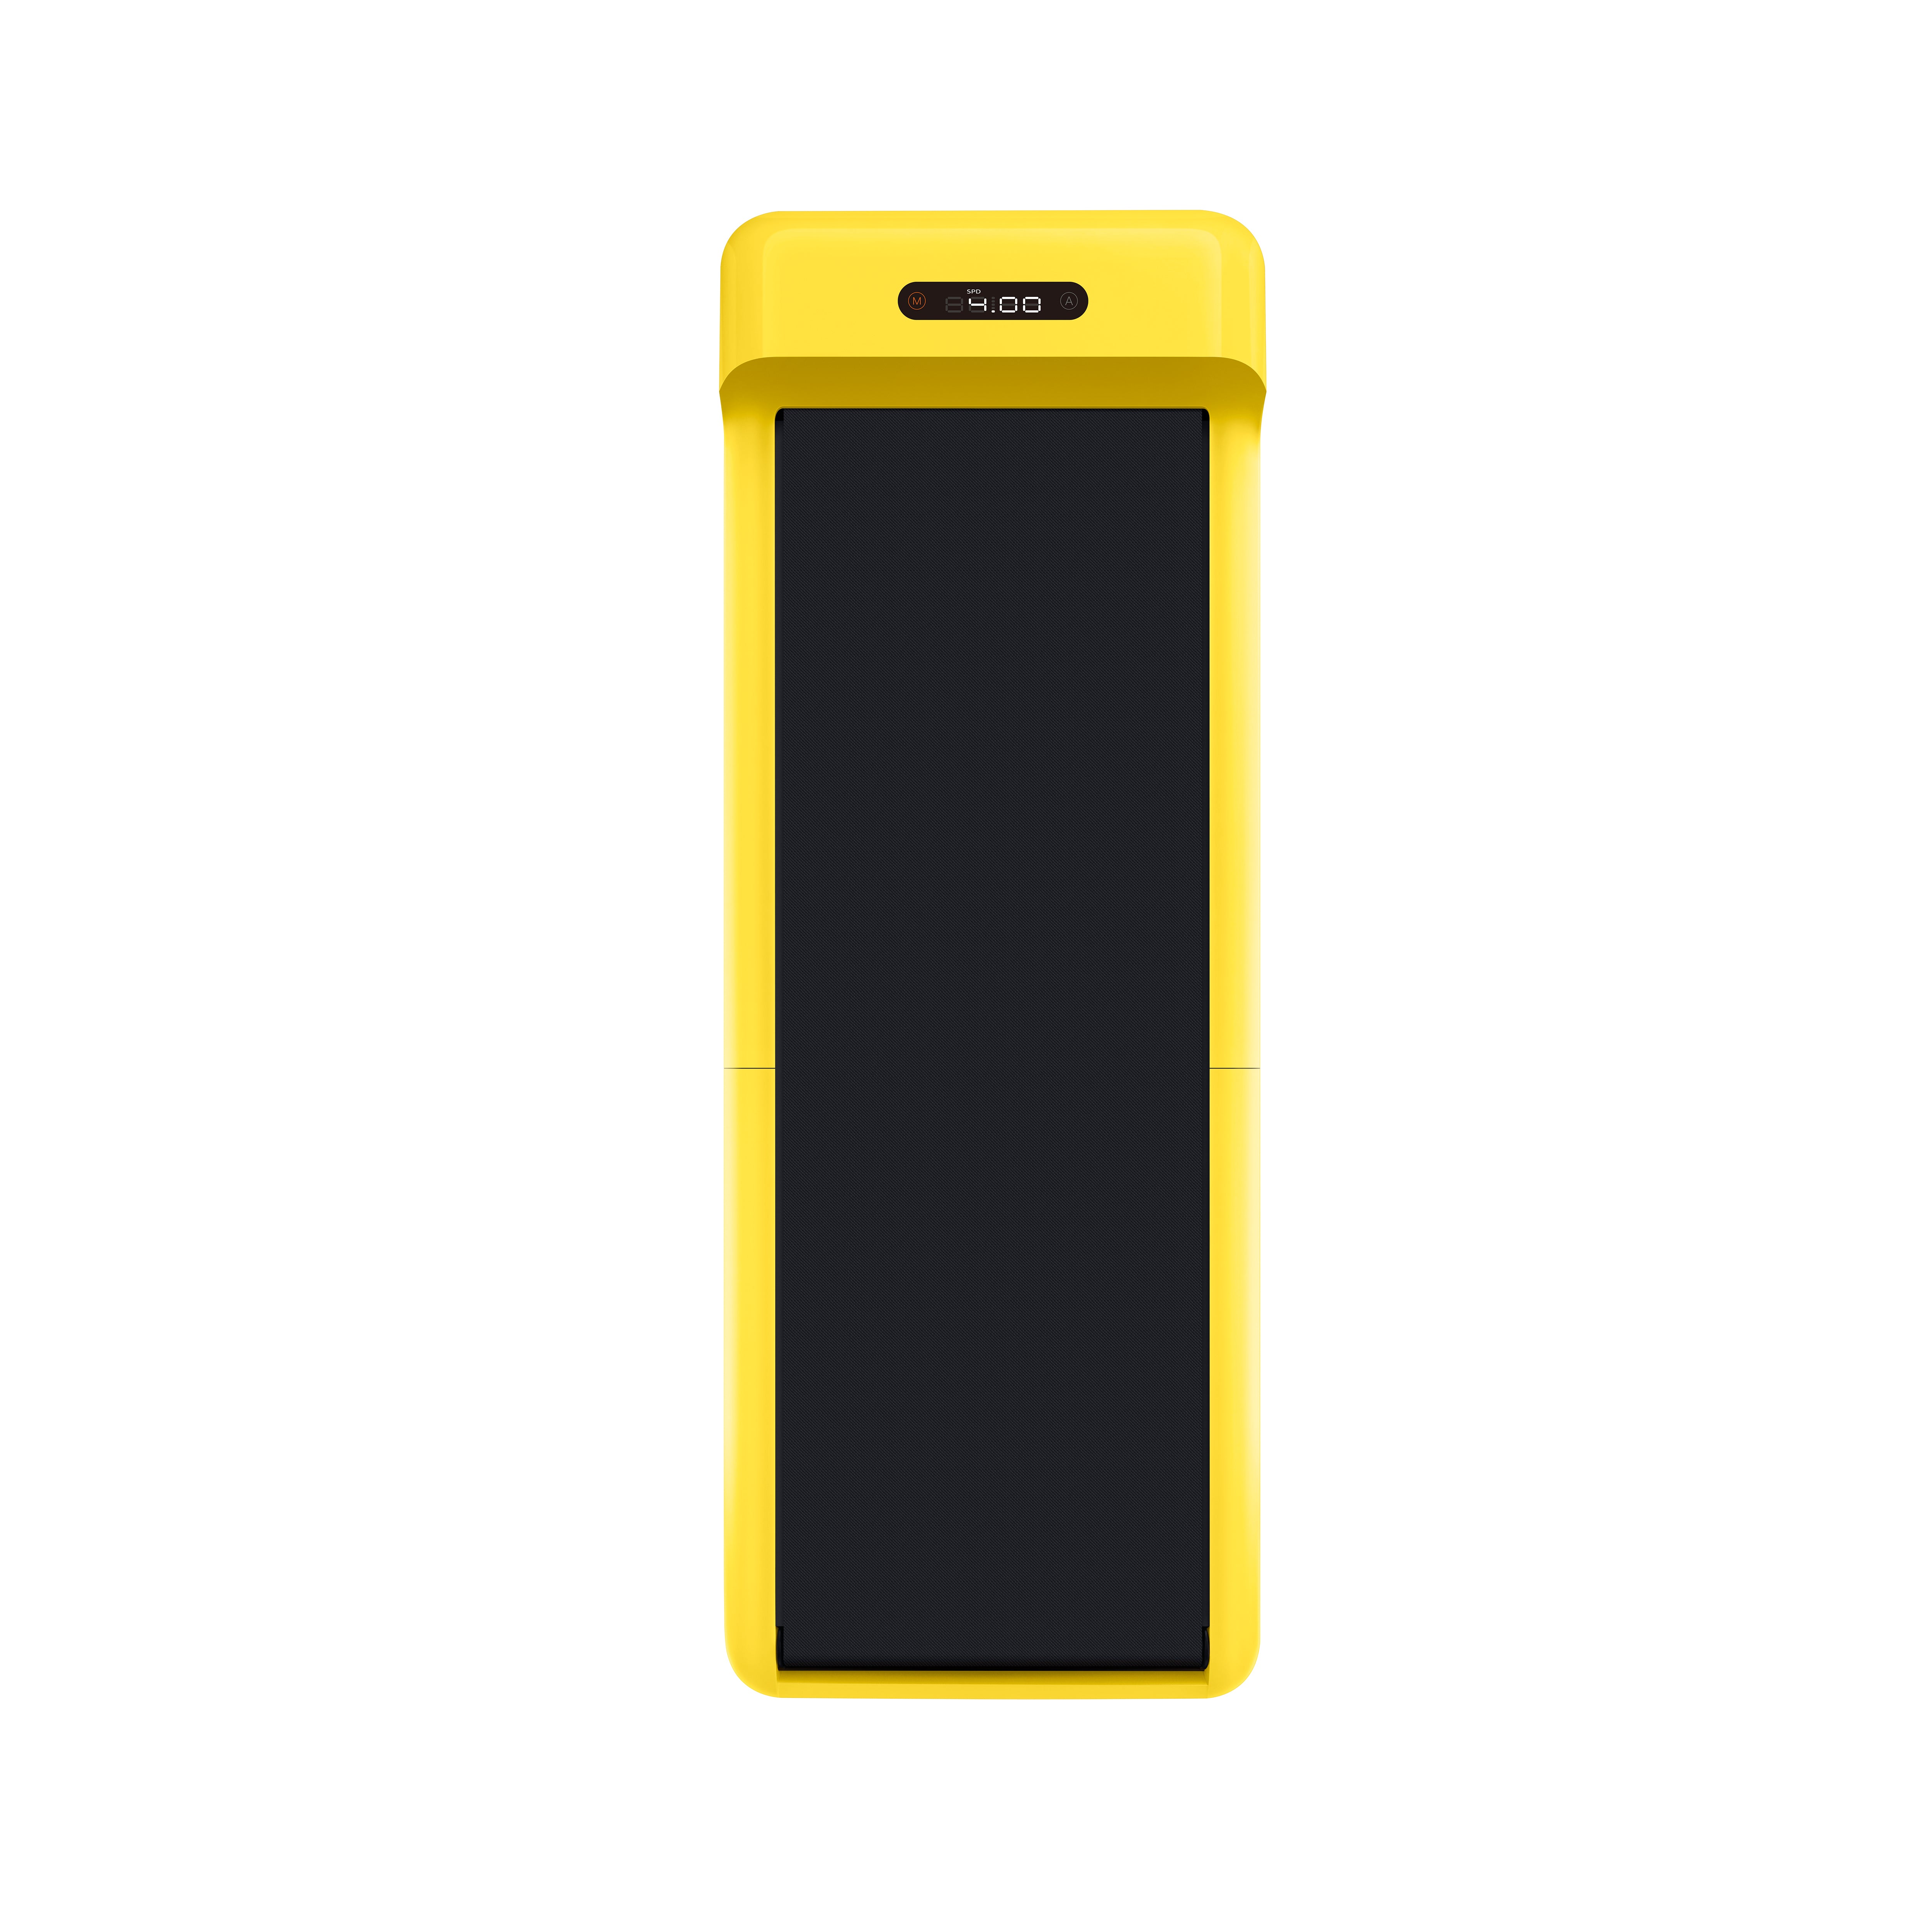 King Smith Walkingpad Smart Foldable Walking Pad C2 - Yellow